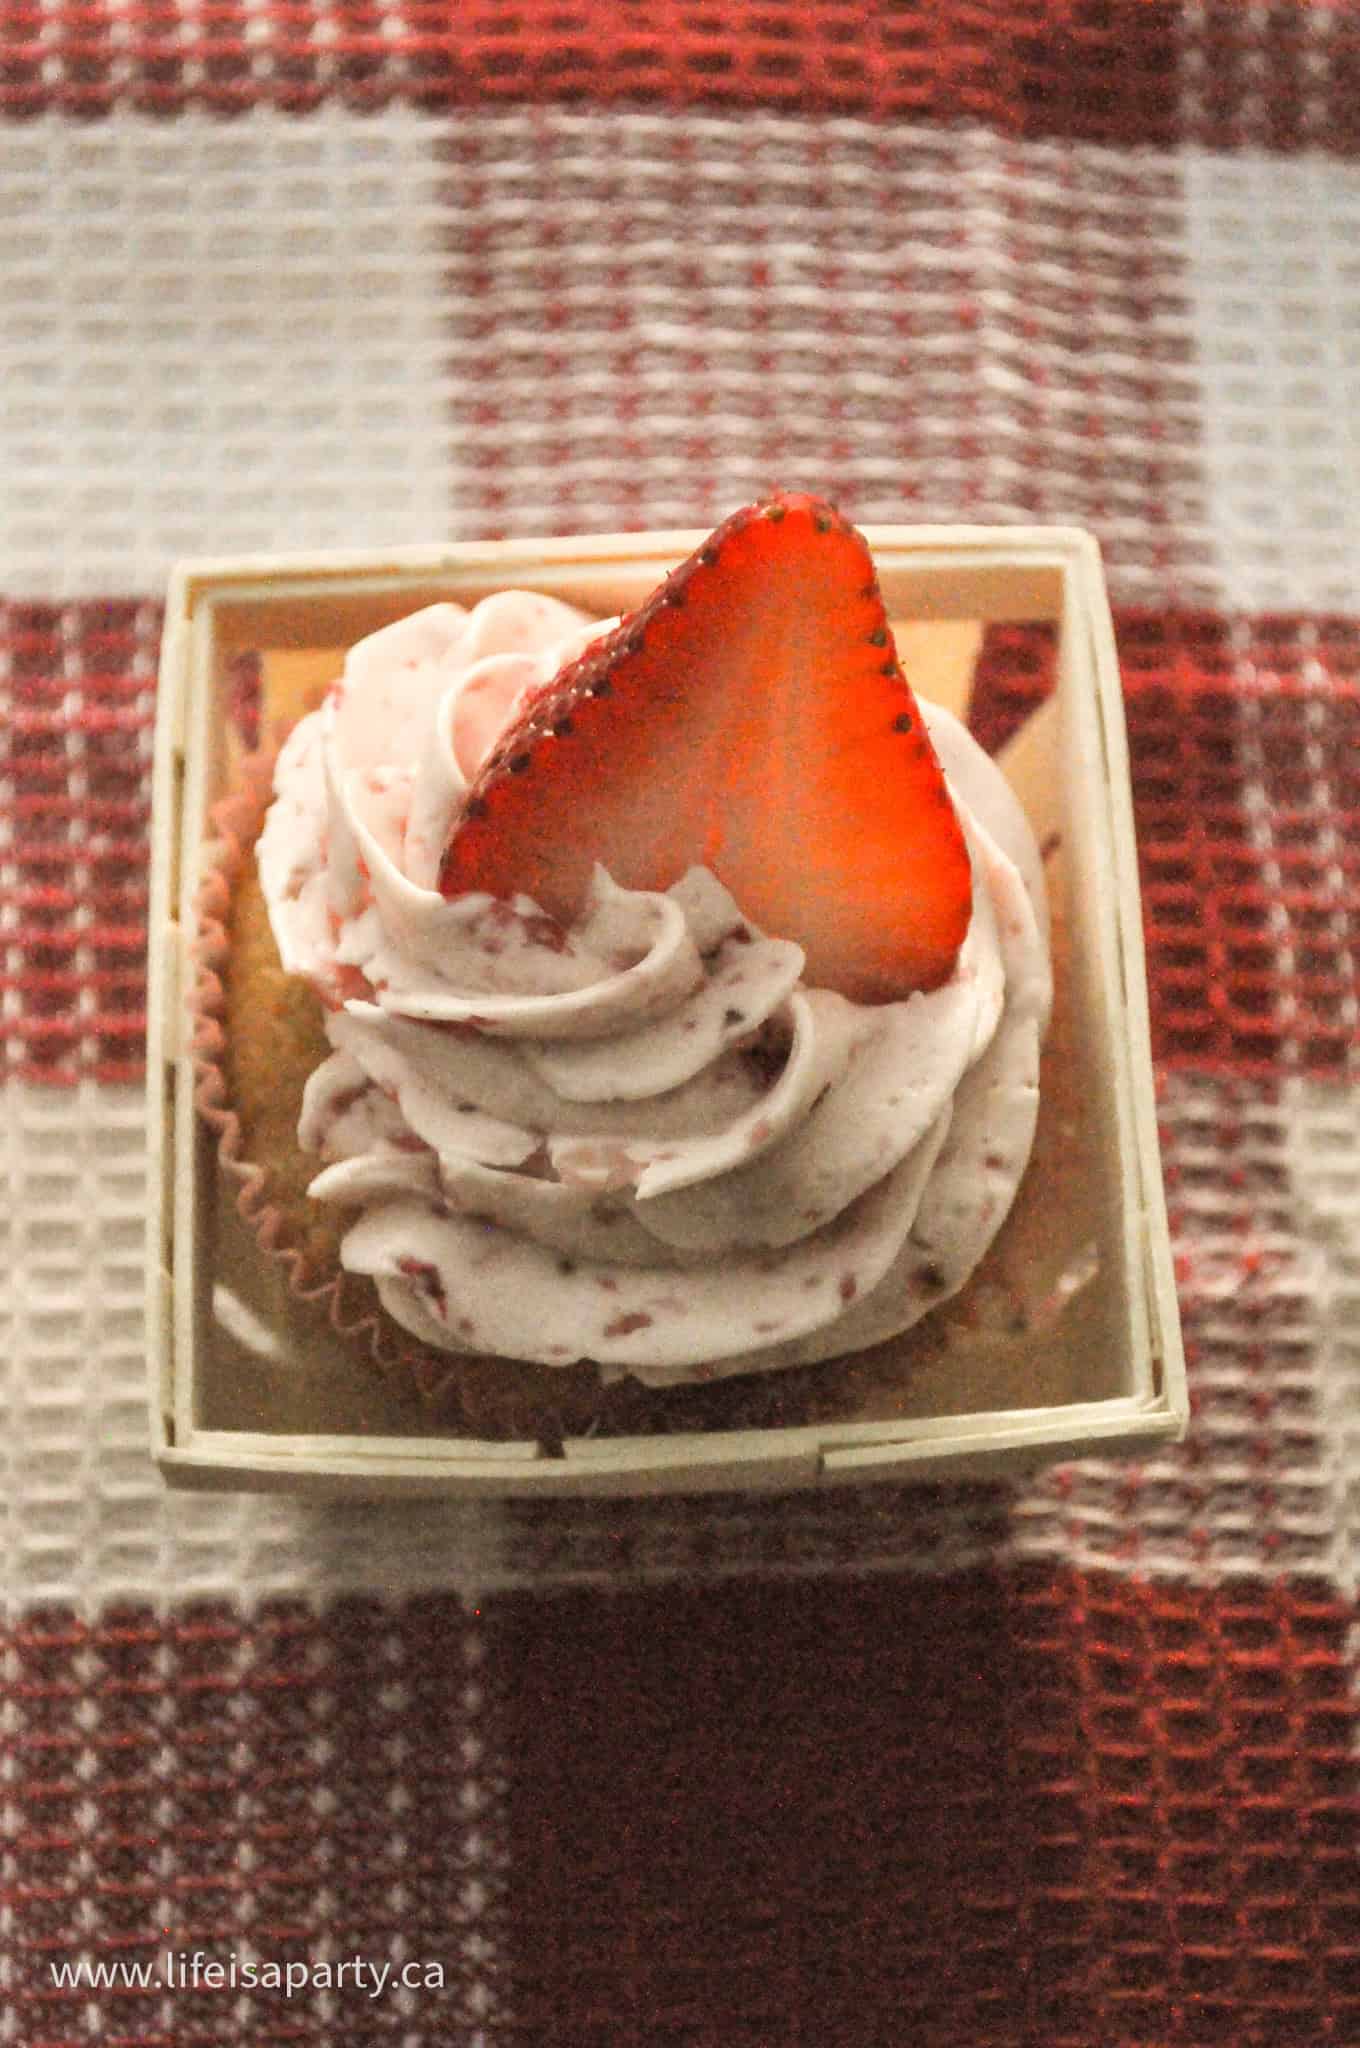 strawberry Swiss meringue buttercream frosting recipe